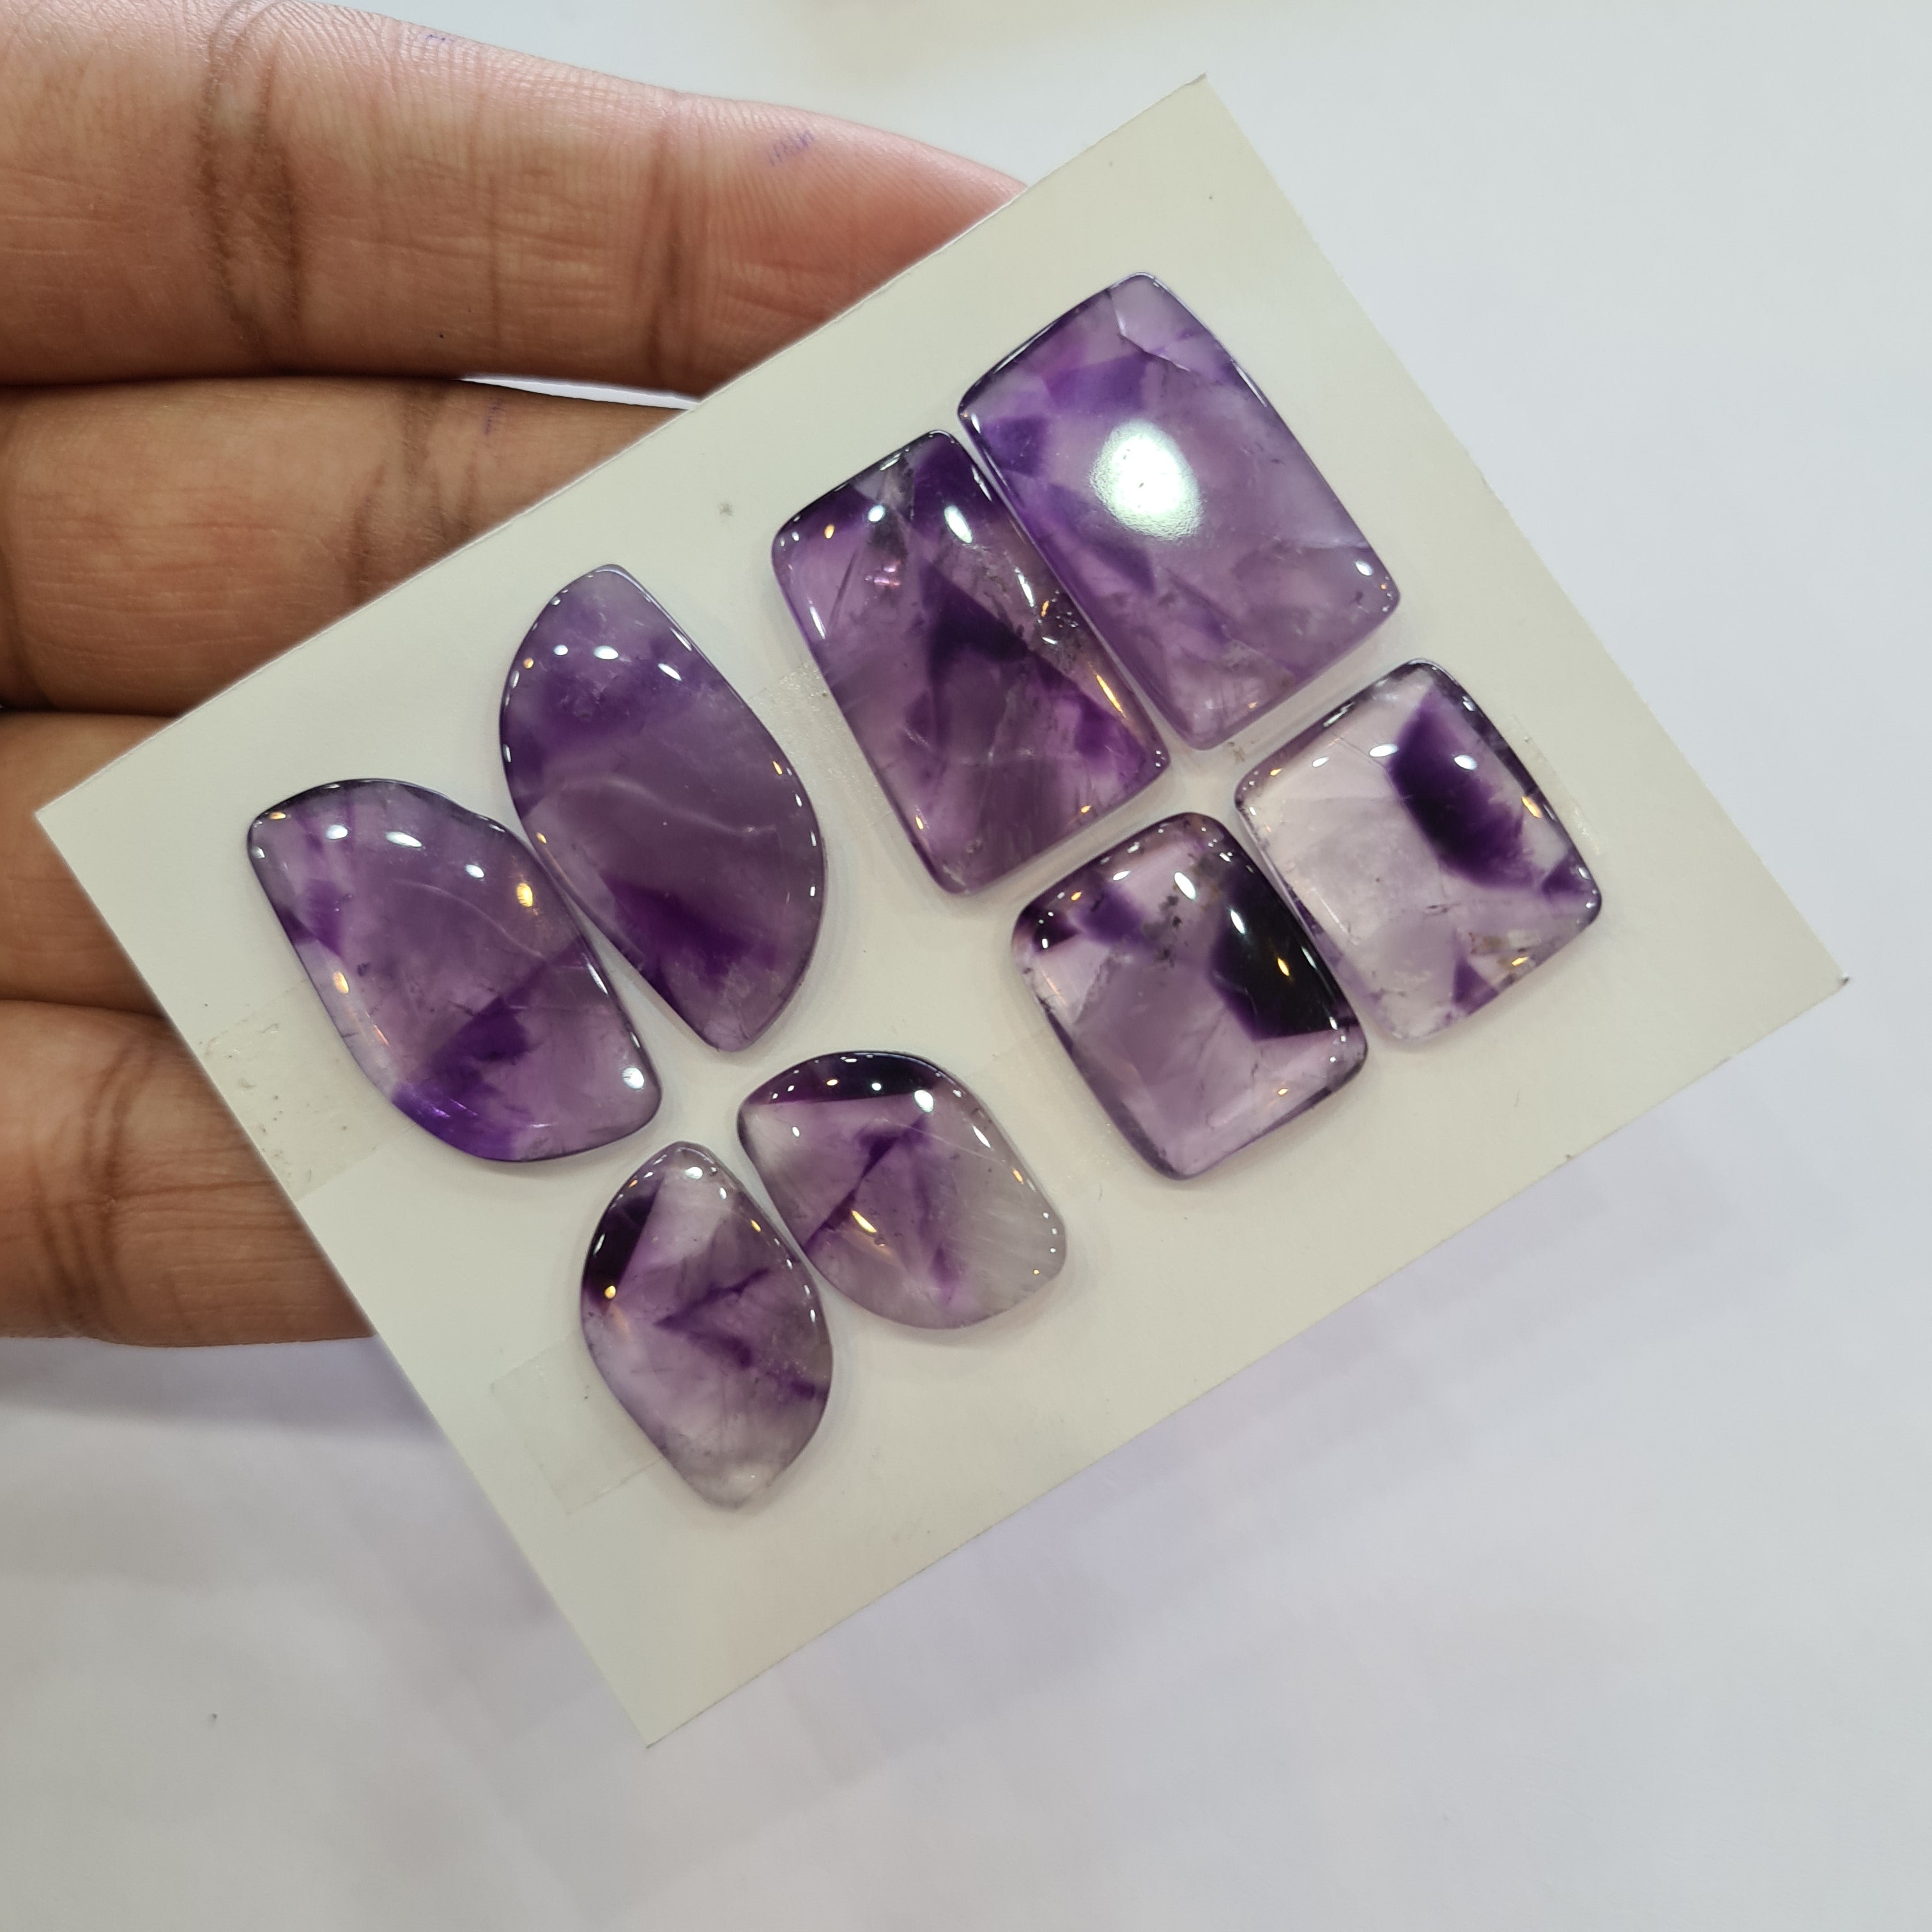 1 Set Trapiche Amethyst flat backs Gemstones Shape Size:14-27mm - The LabradoriteKing